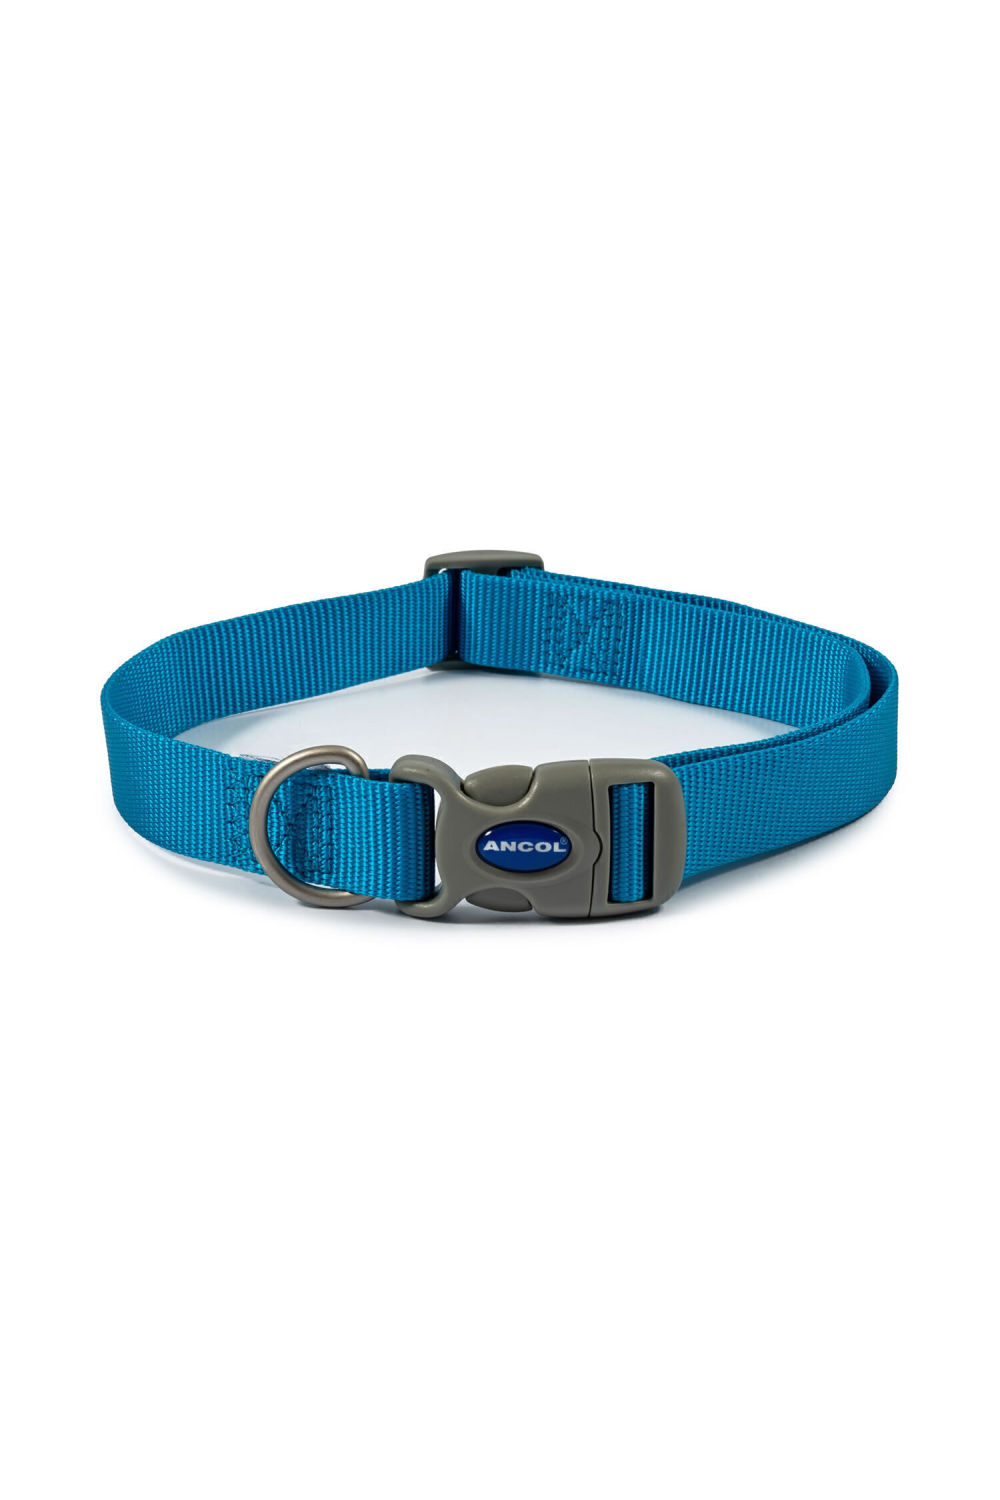 Ancol Viva Adjustable Dog Collar (Blue) (17.72in - 29.53in)